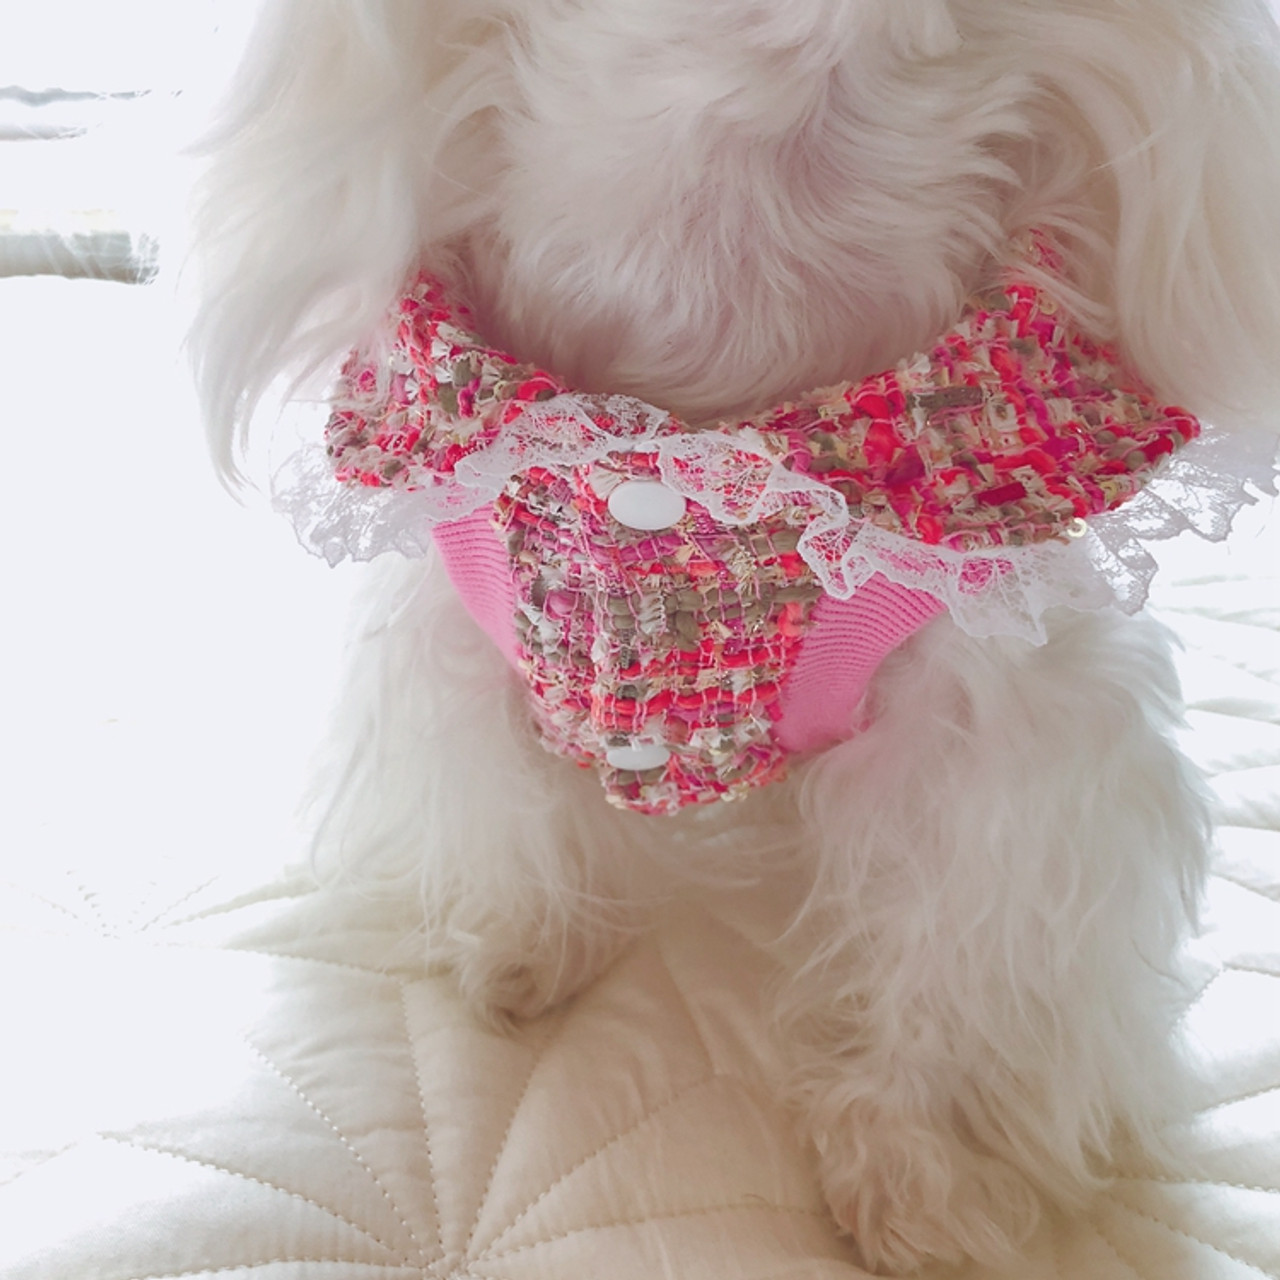 Chanel  Puppy clothes, Dog clothes, Designer dog clothes